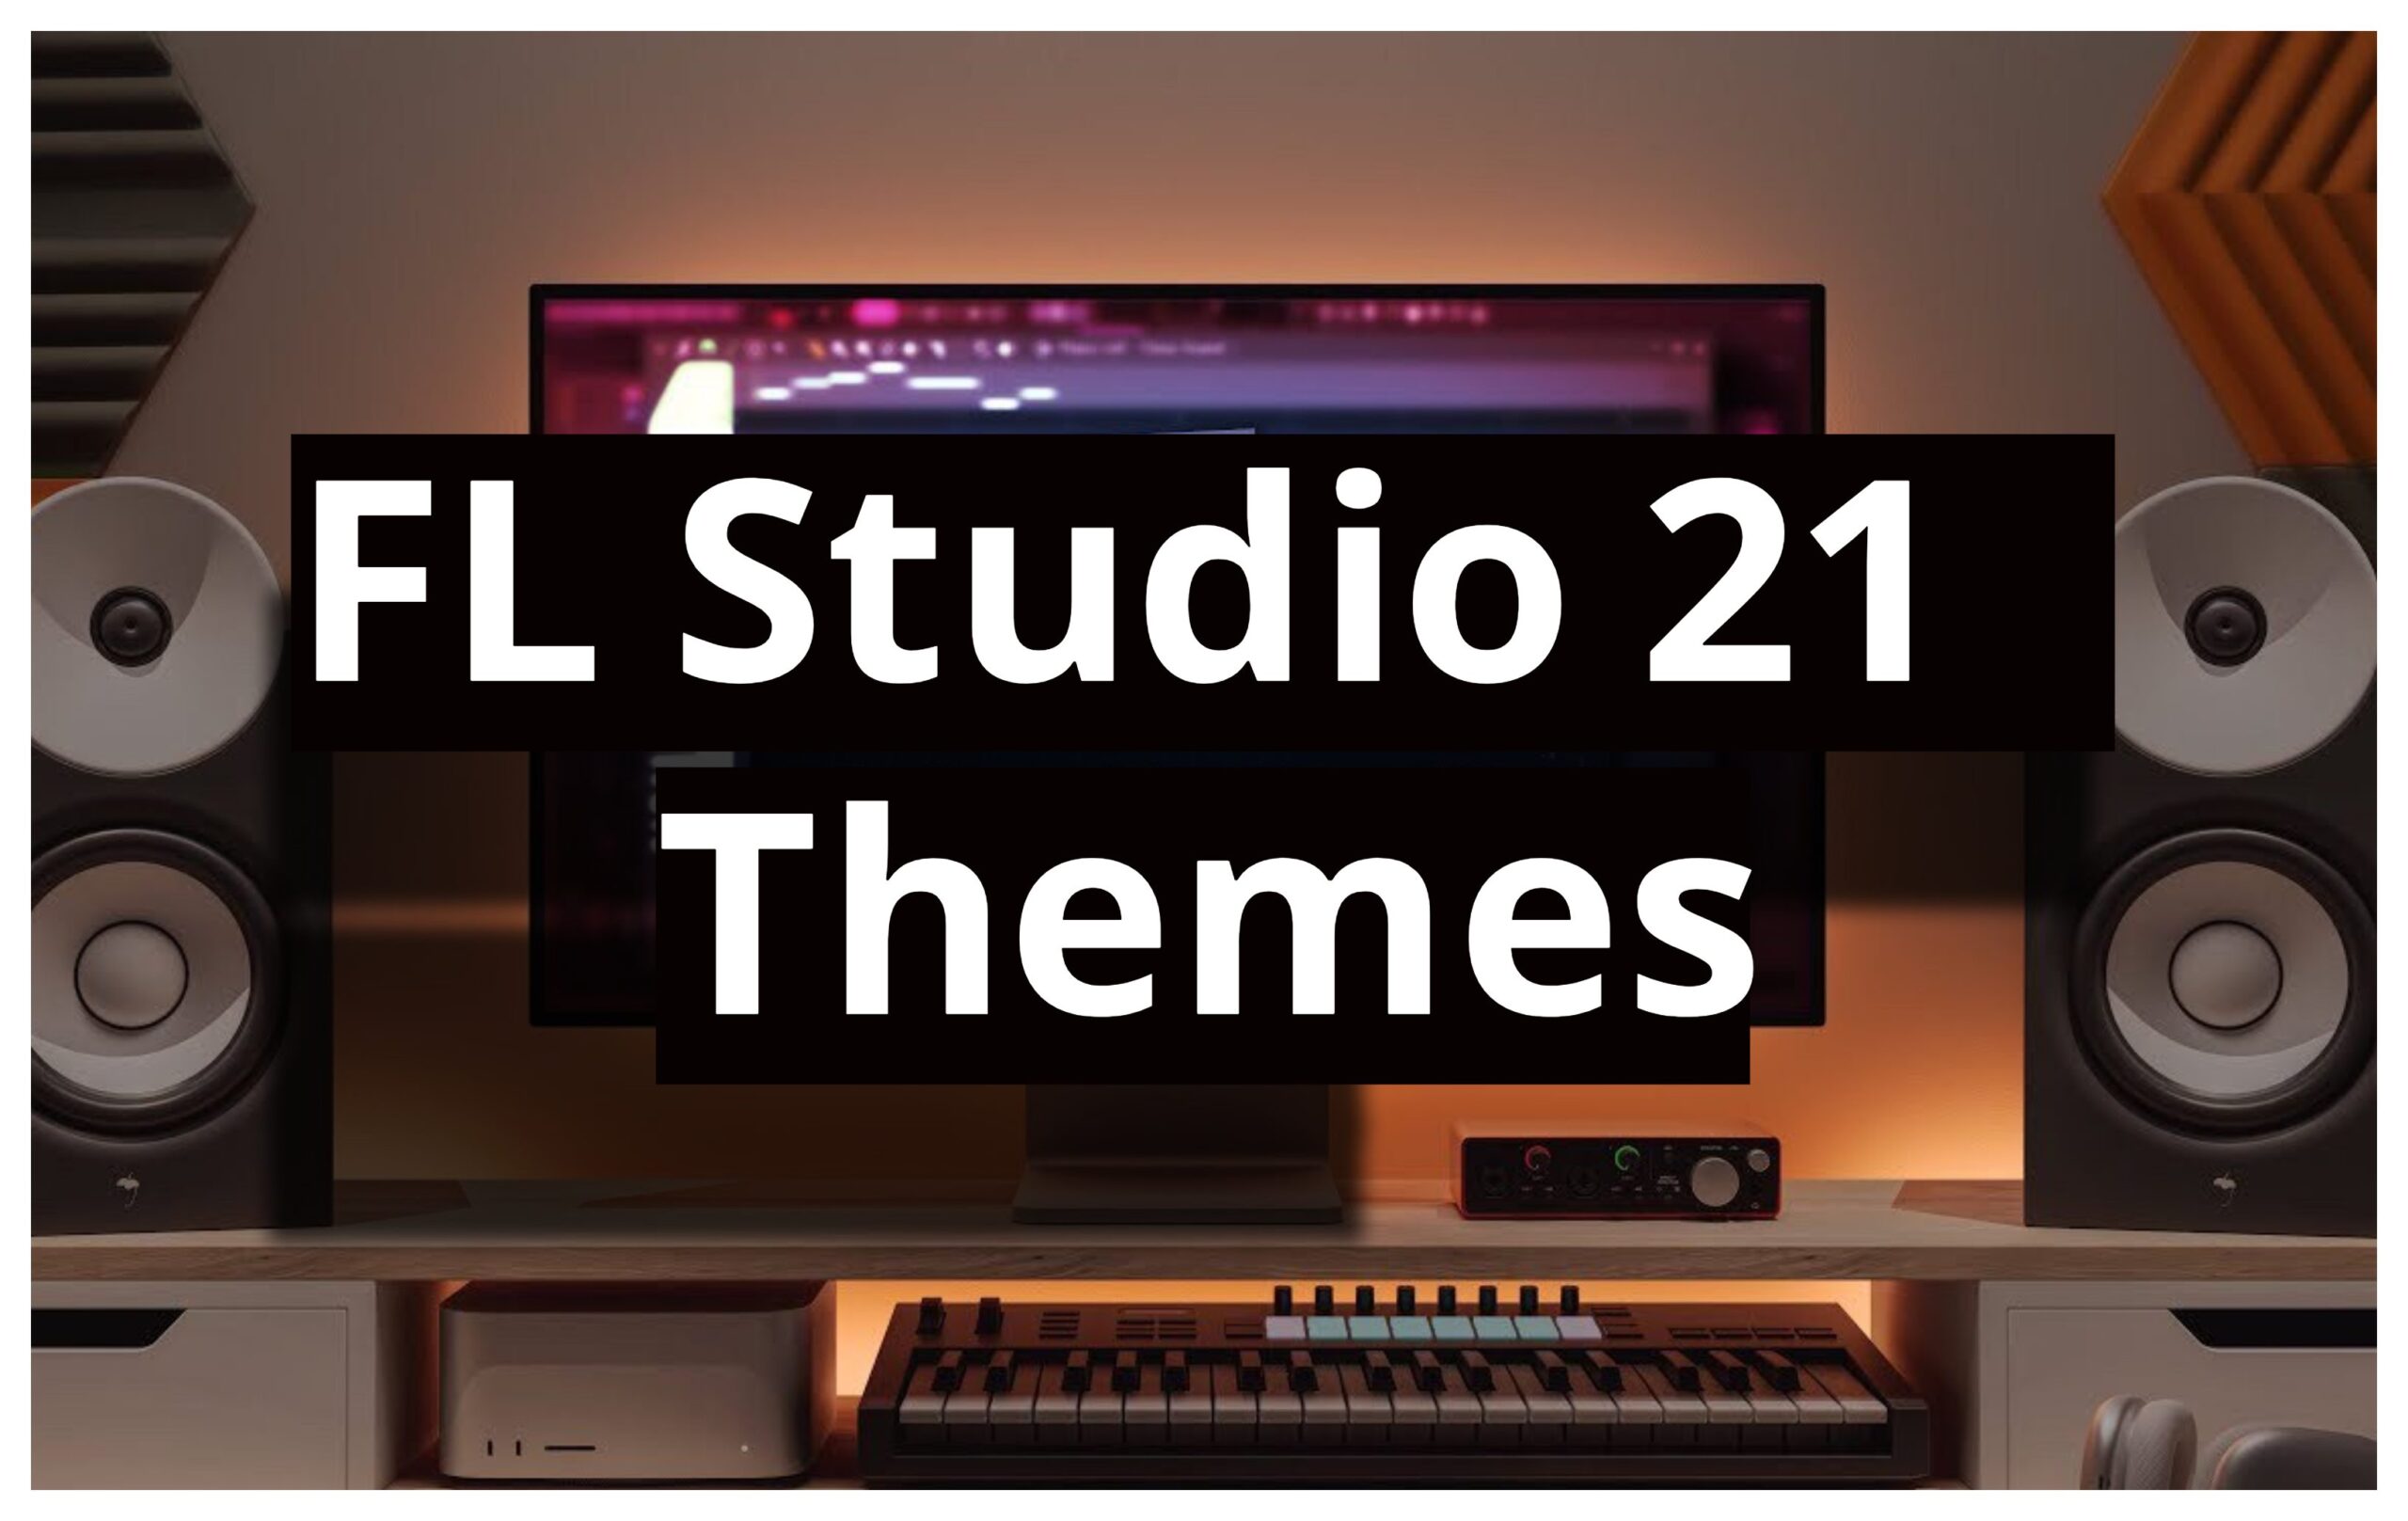 FL Studio 21 Themes Free Download